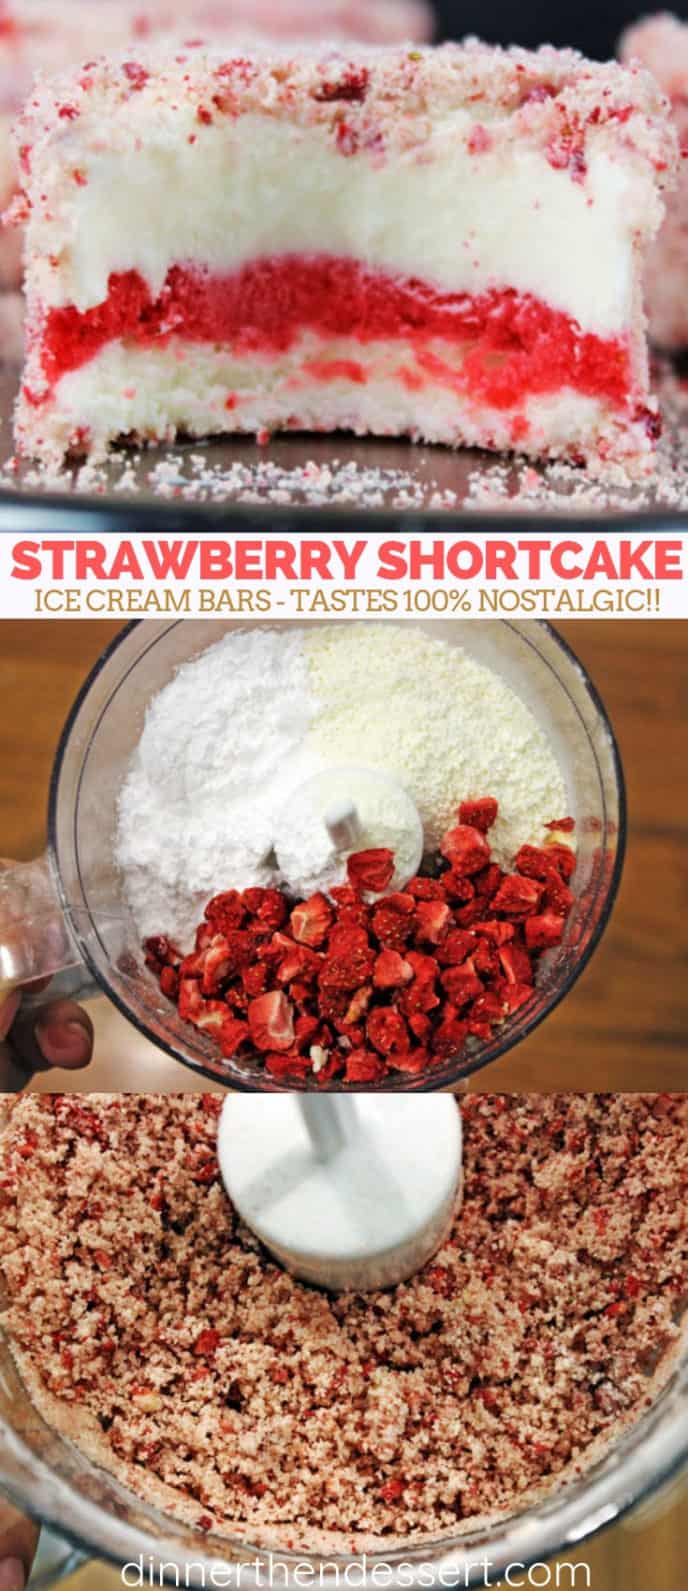 Good Humor Copycat Strawberry Shortcake Ice Cream Bars